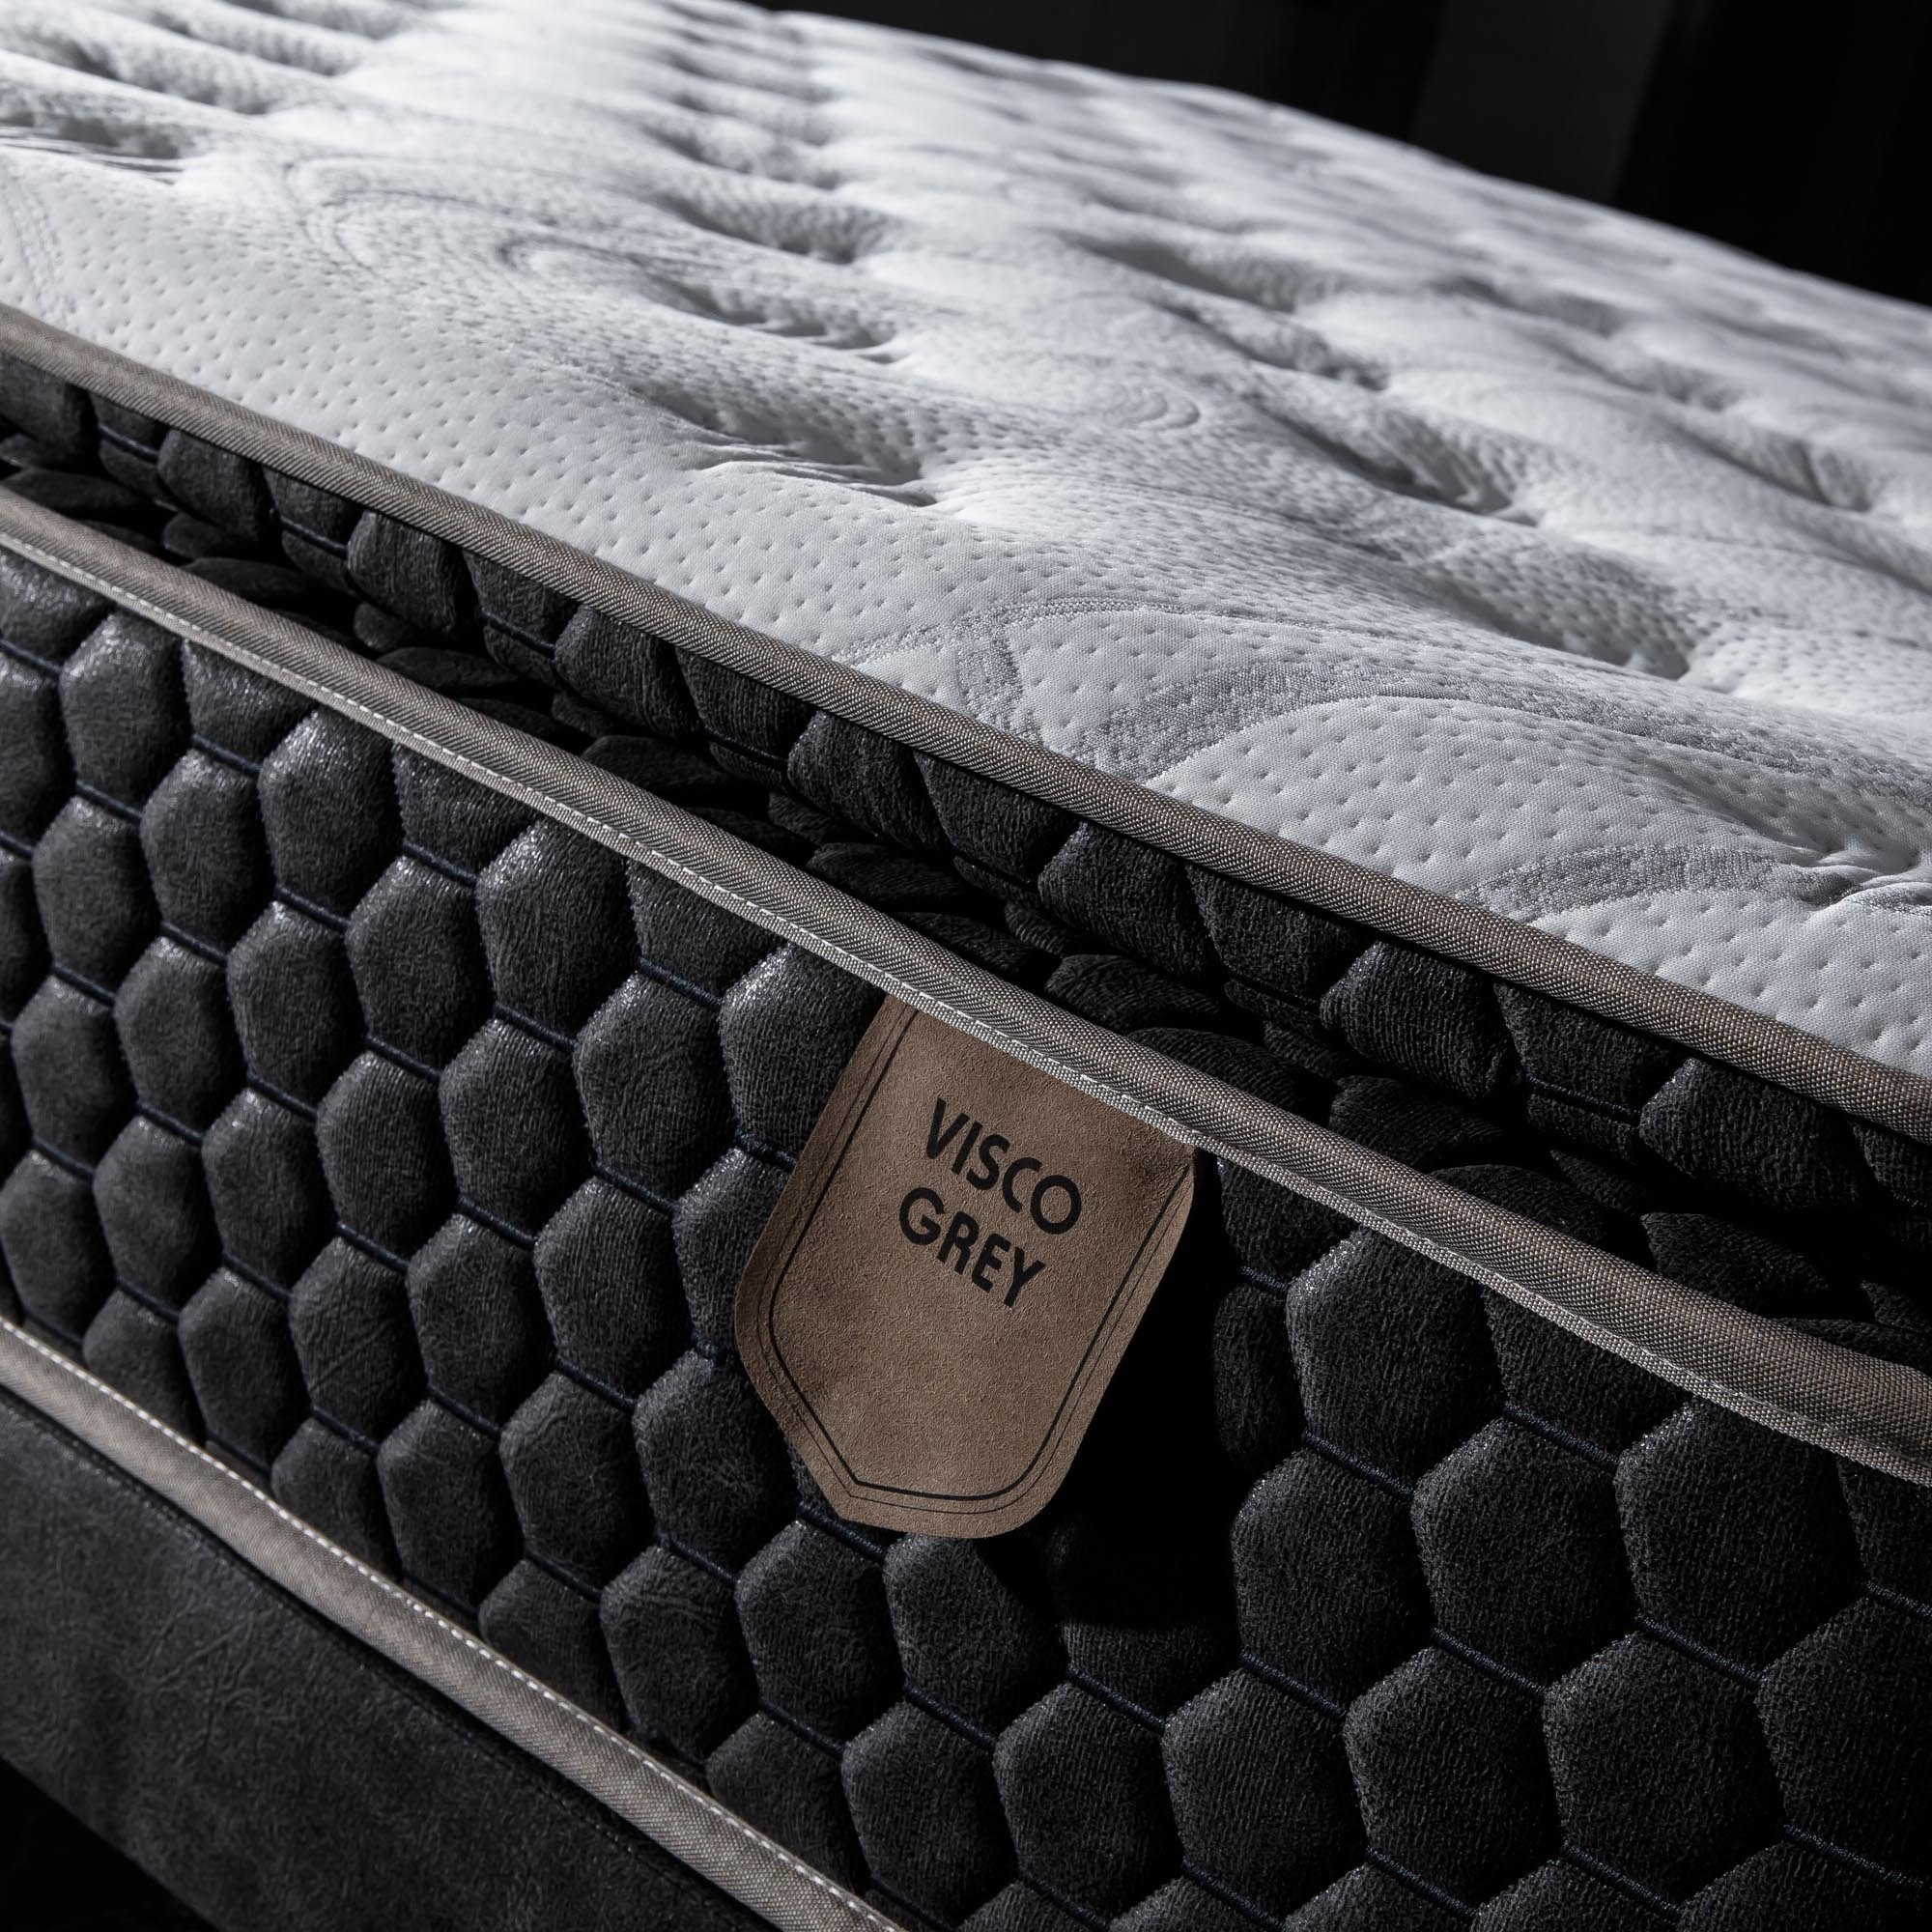 Visco Grey Mattress 150x200cm